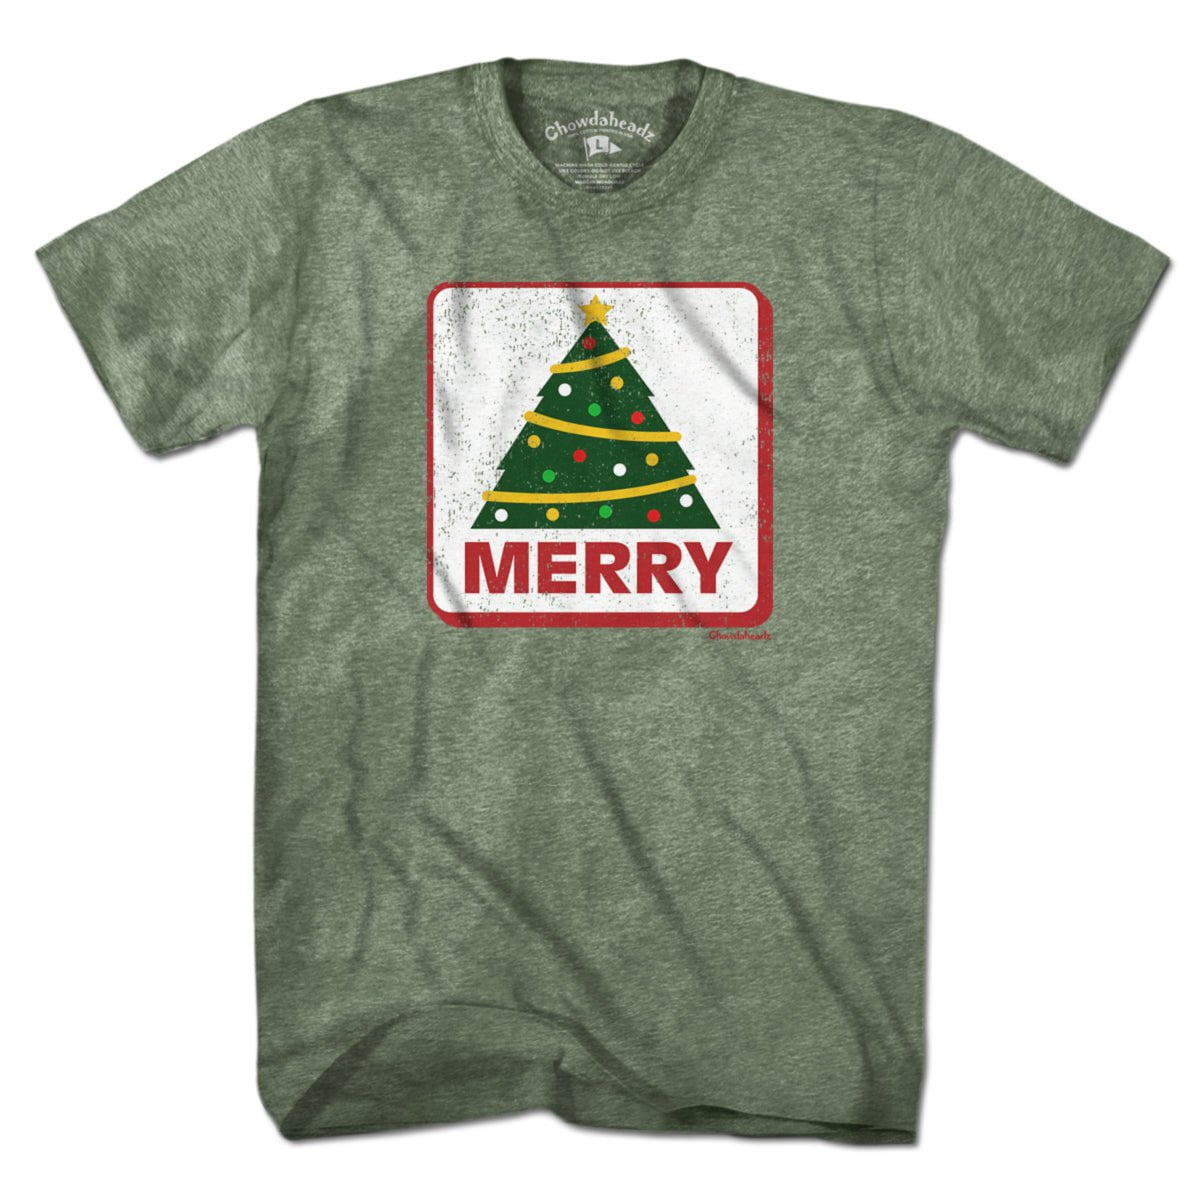 Merry Christmas Tree Sign T-Shirt - Chowdaheadz